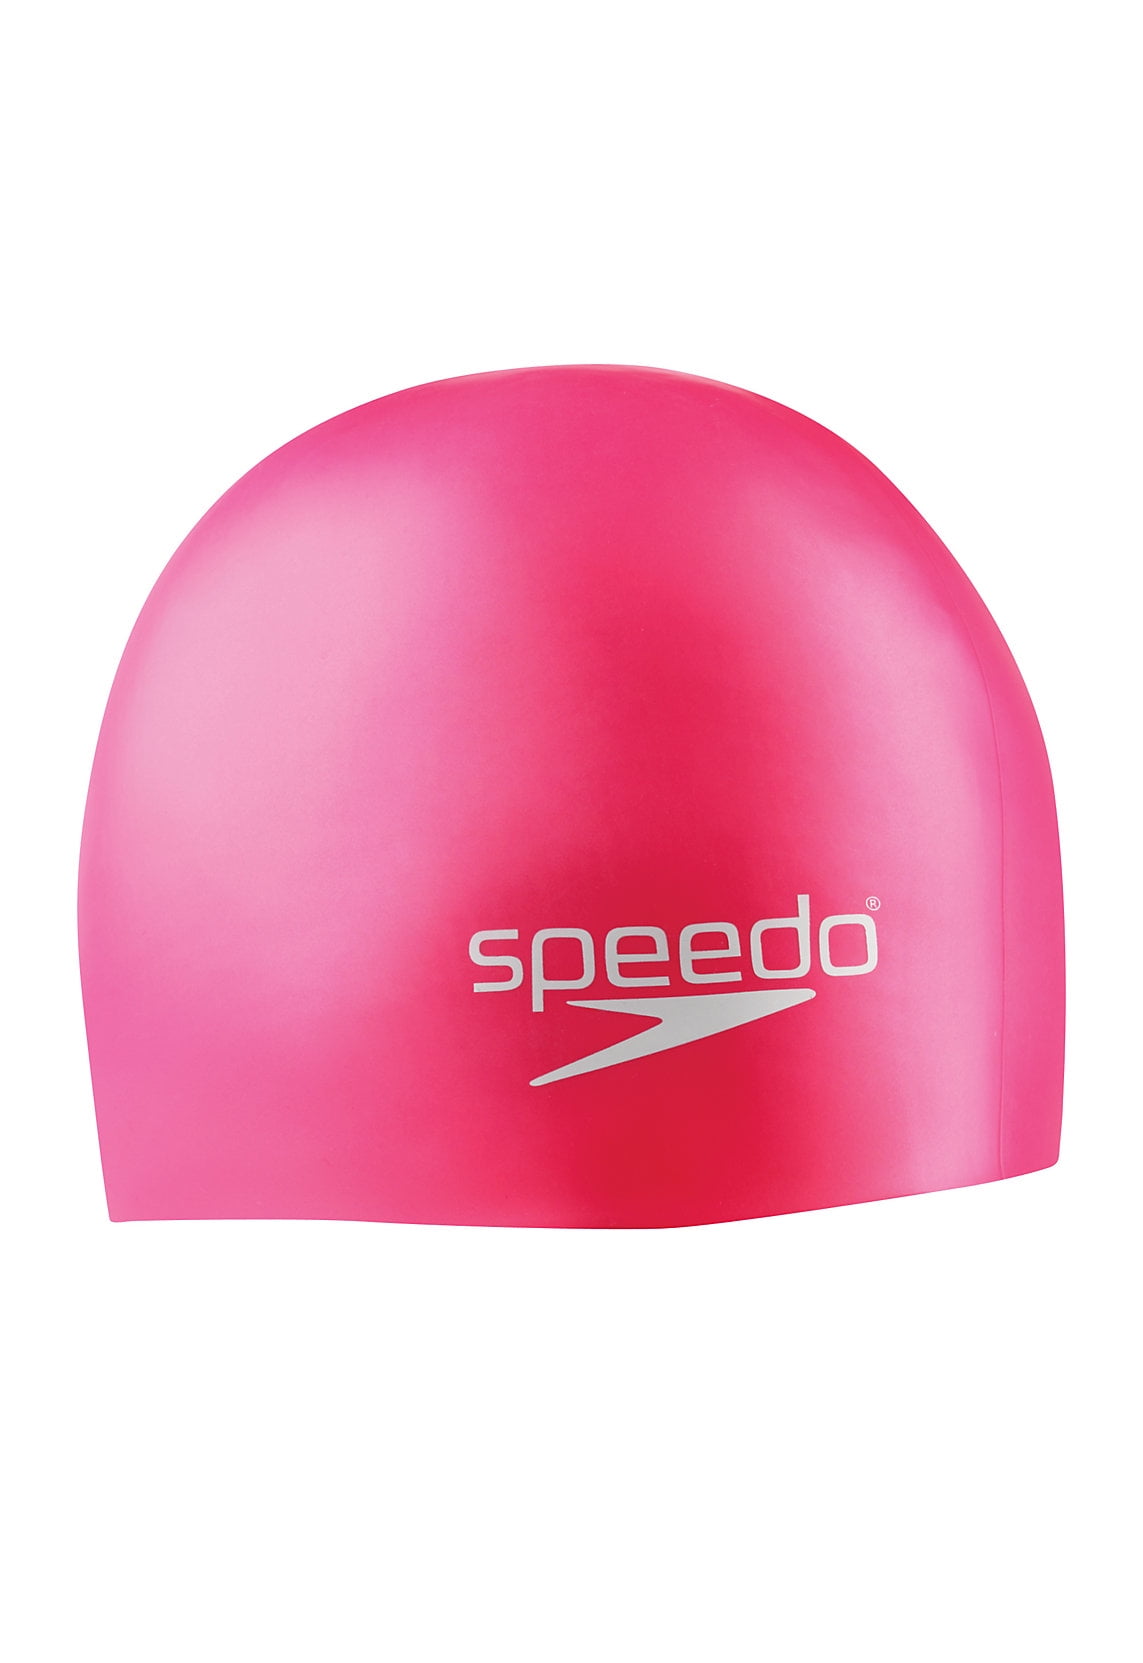 Speedo Fit Sport Neon Green Elastomeric Solid Silicone Swimming Cap 2pk for sale online 